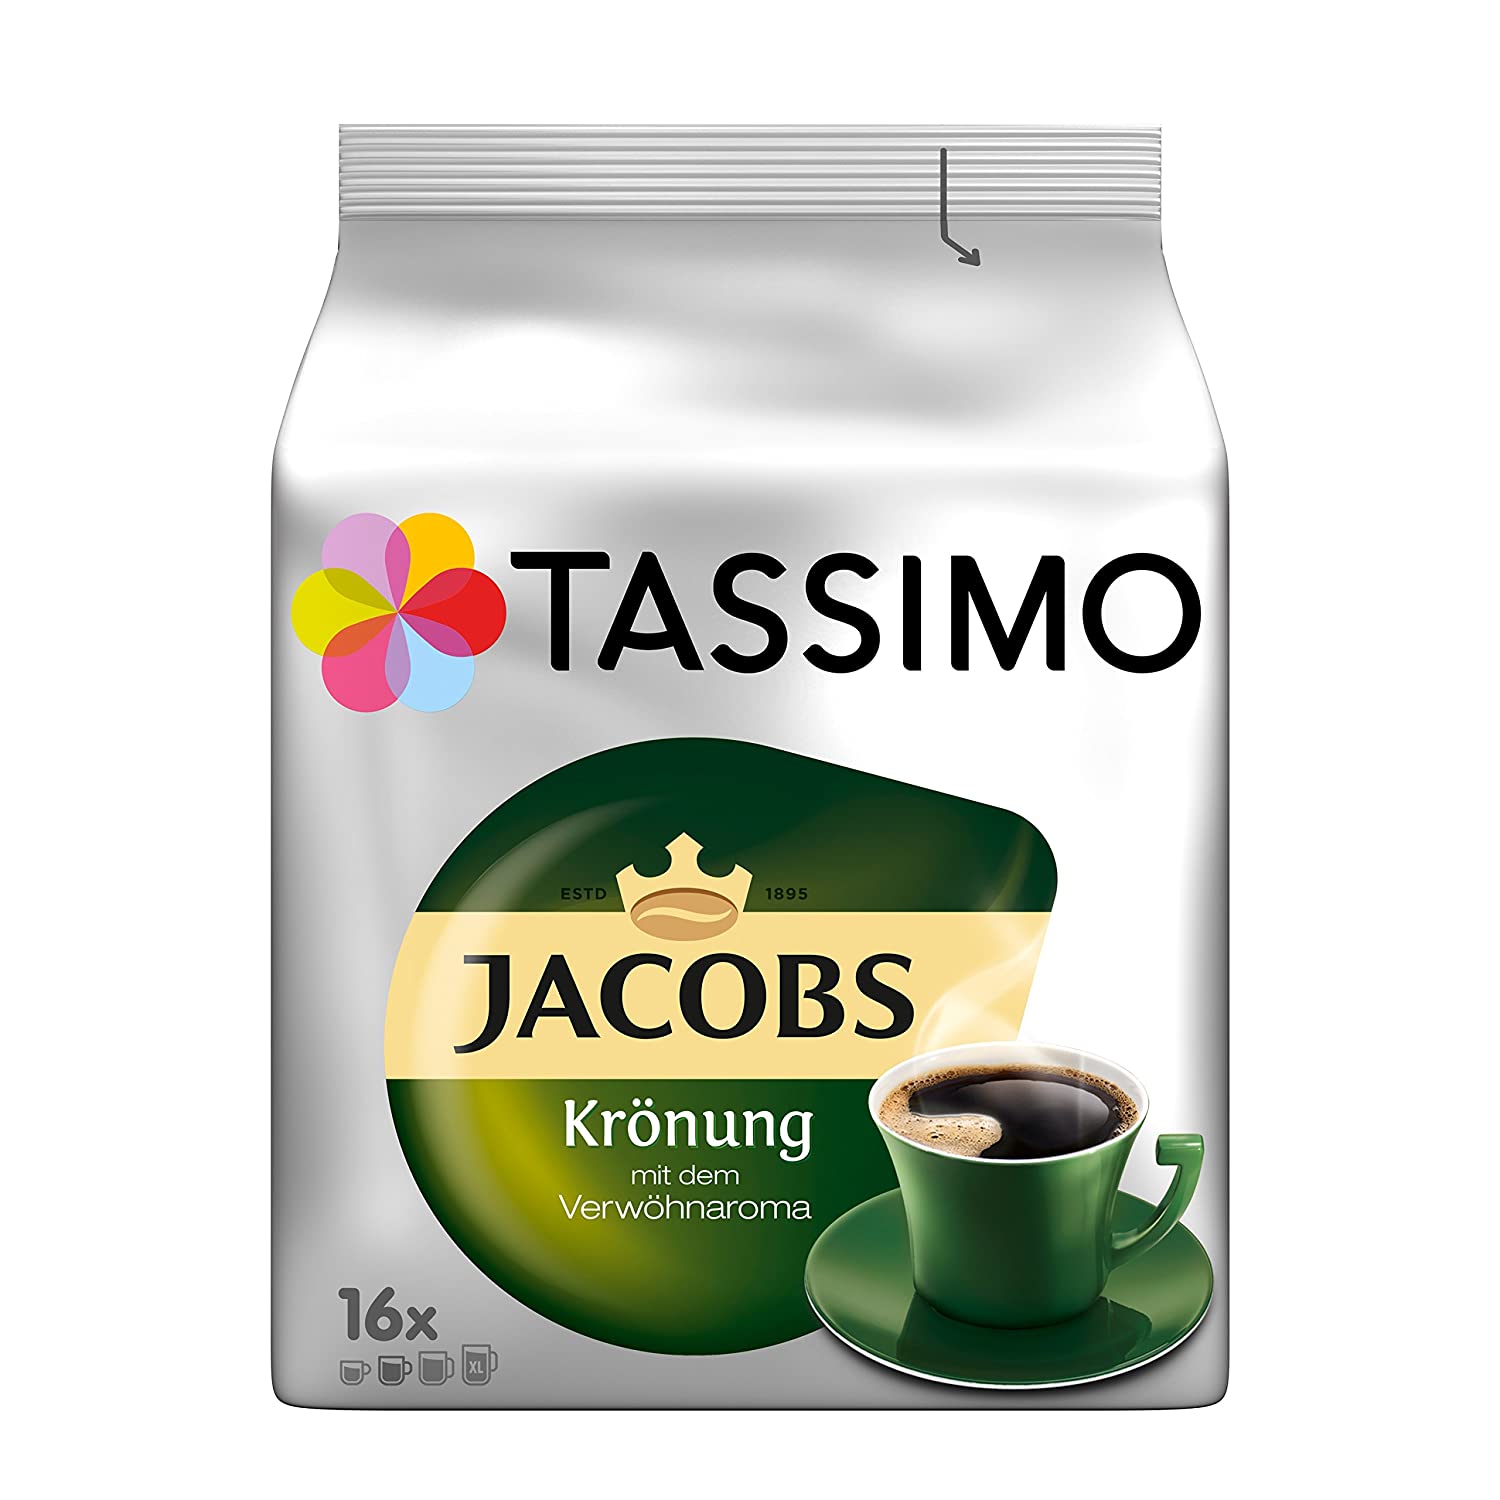 Tassimo Jacobs Krönung, Rainforest Alliance Certified, Pack of 5, 5 x 16 T-Discs